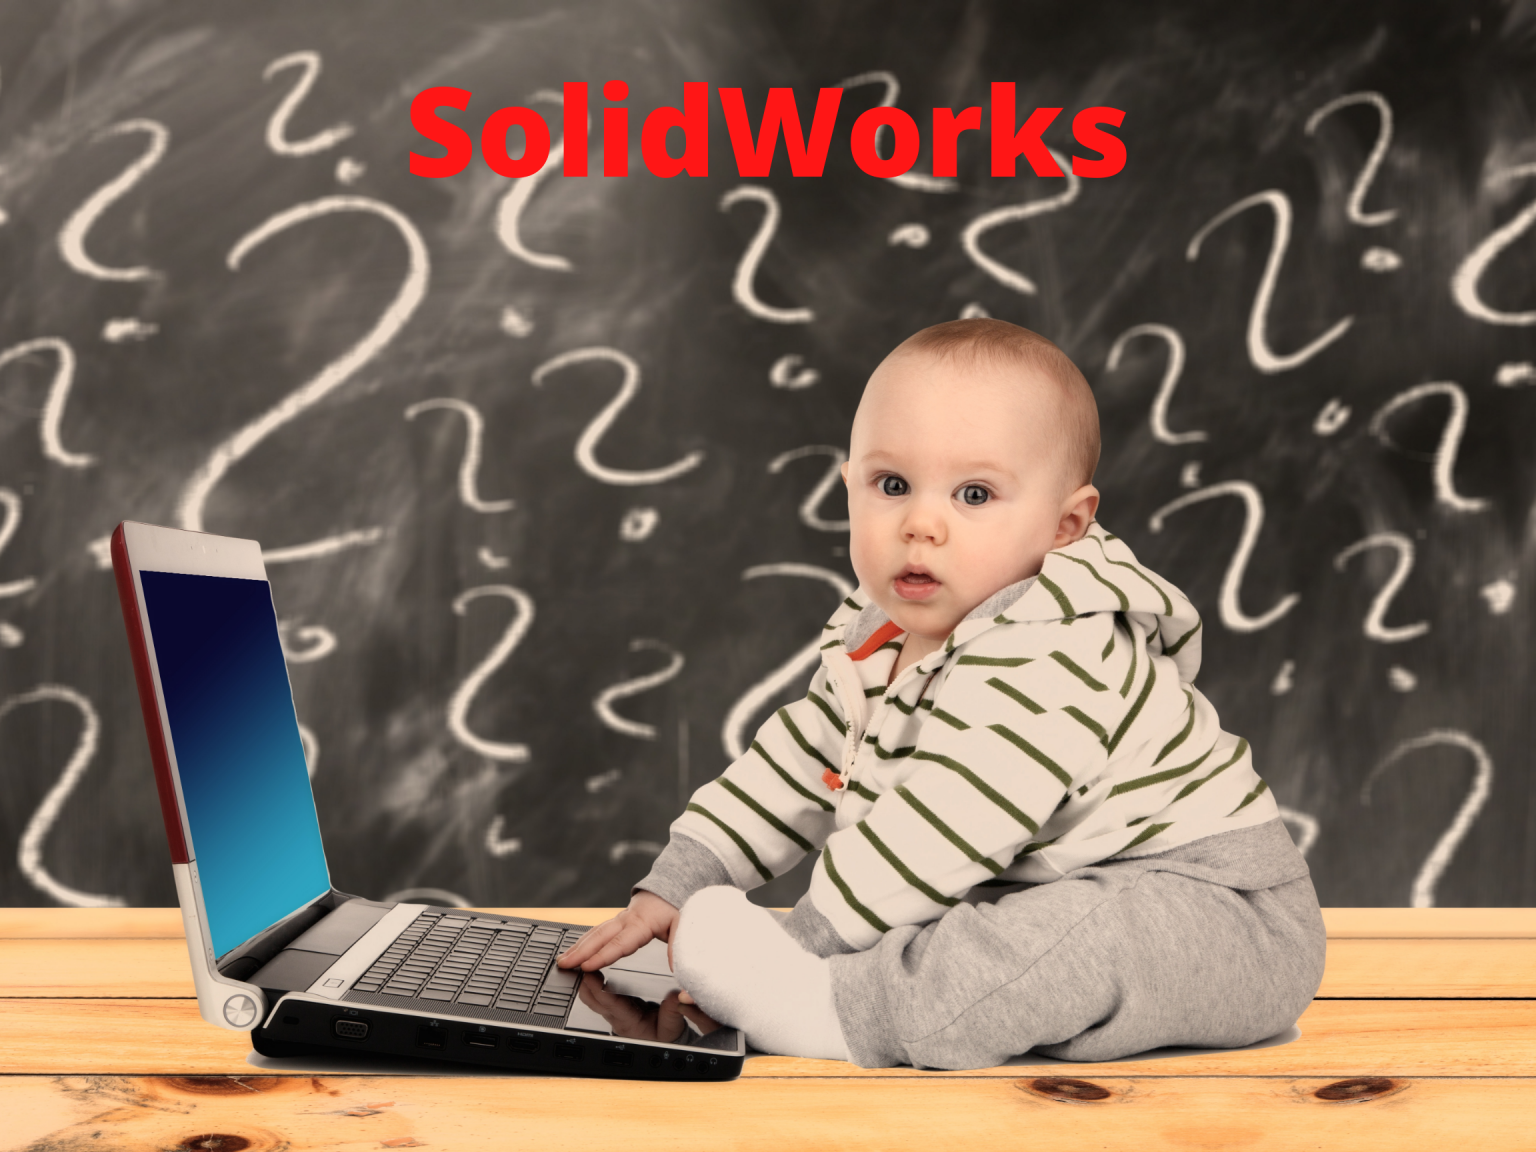 linkedin learning solidworks xdesign online